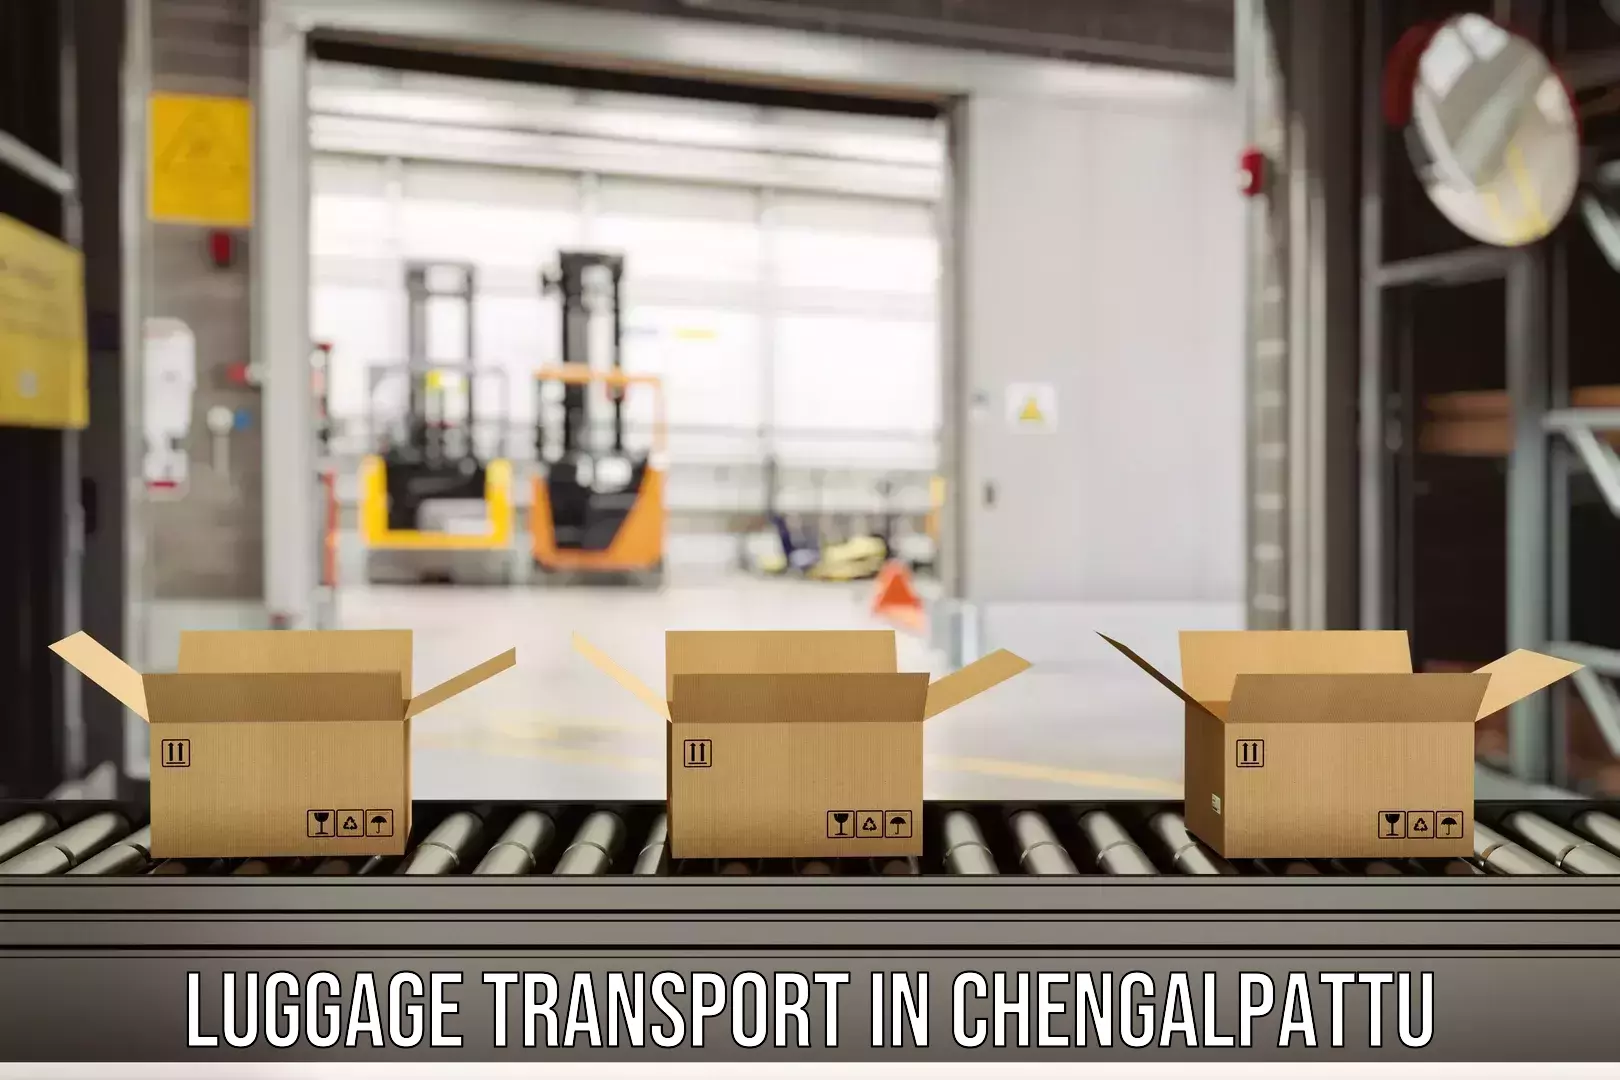 Regional luggage transport in Chengalpattu